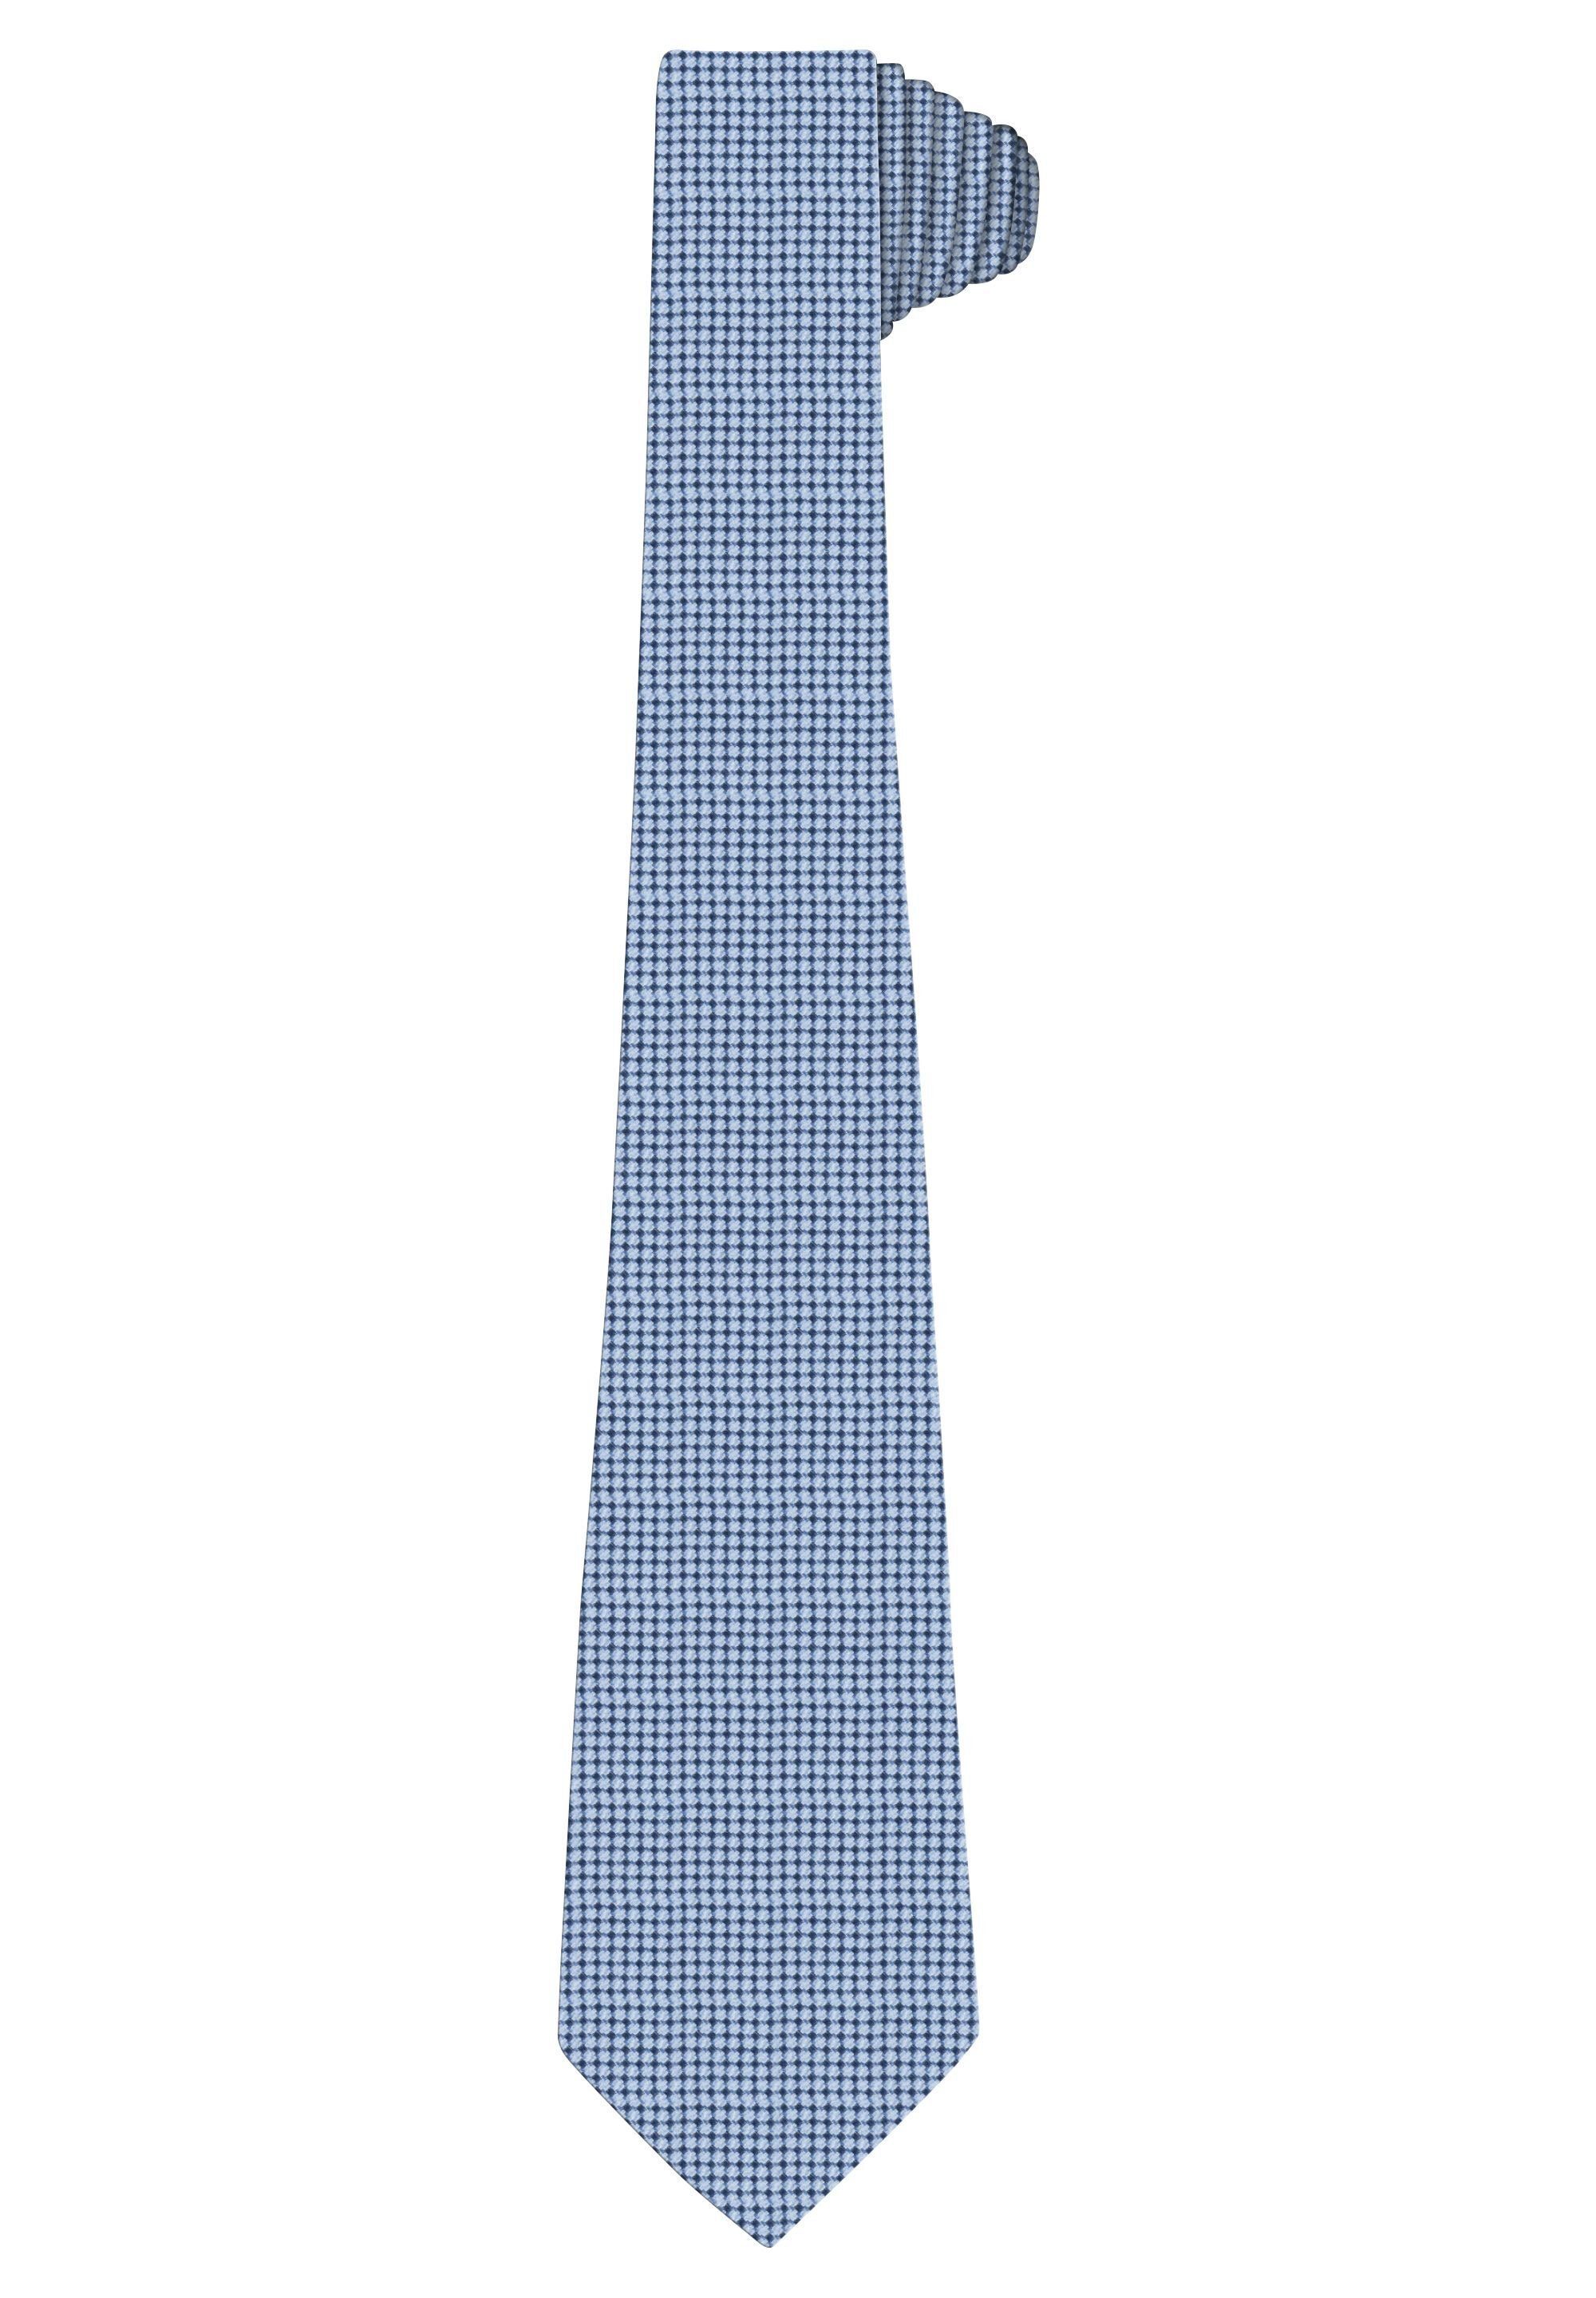 HECHTER PARIS Krawatte mit Modische Musterung sky blue